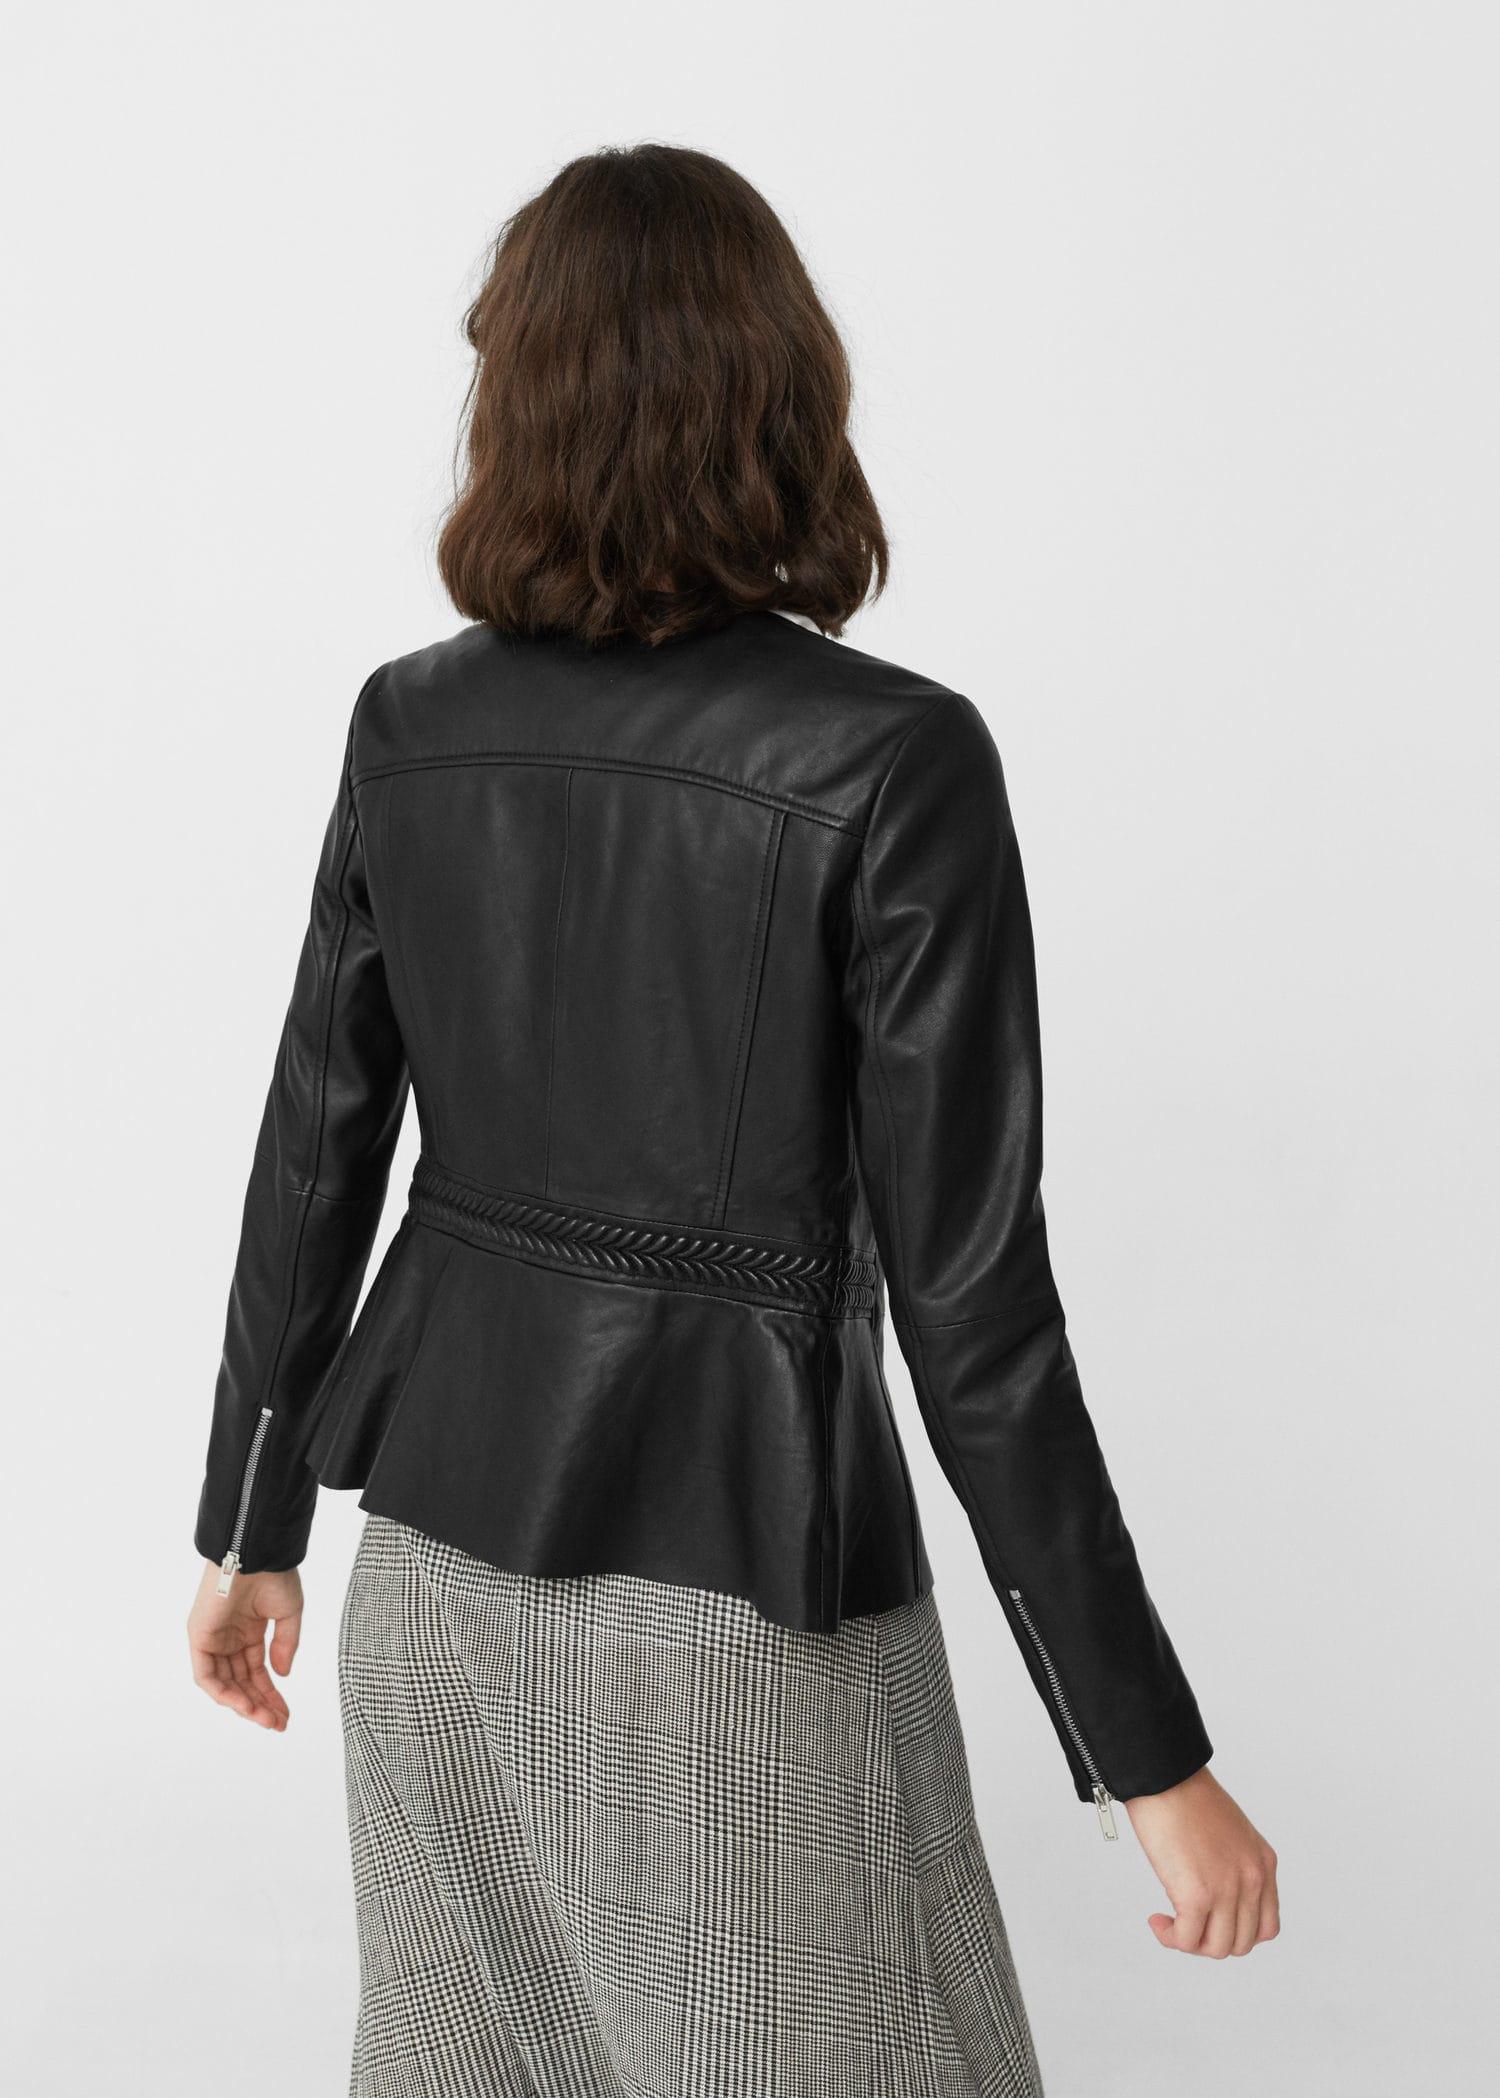 Lyst - Mango Leather Jacket in Black